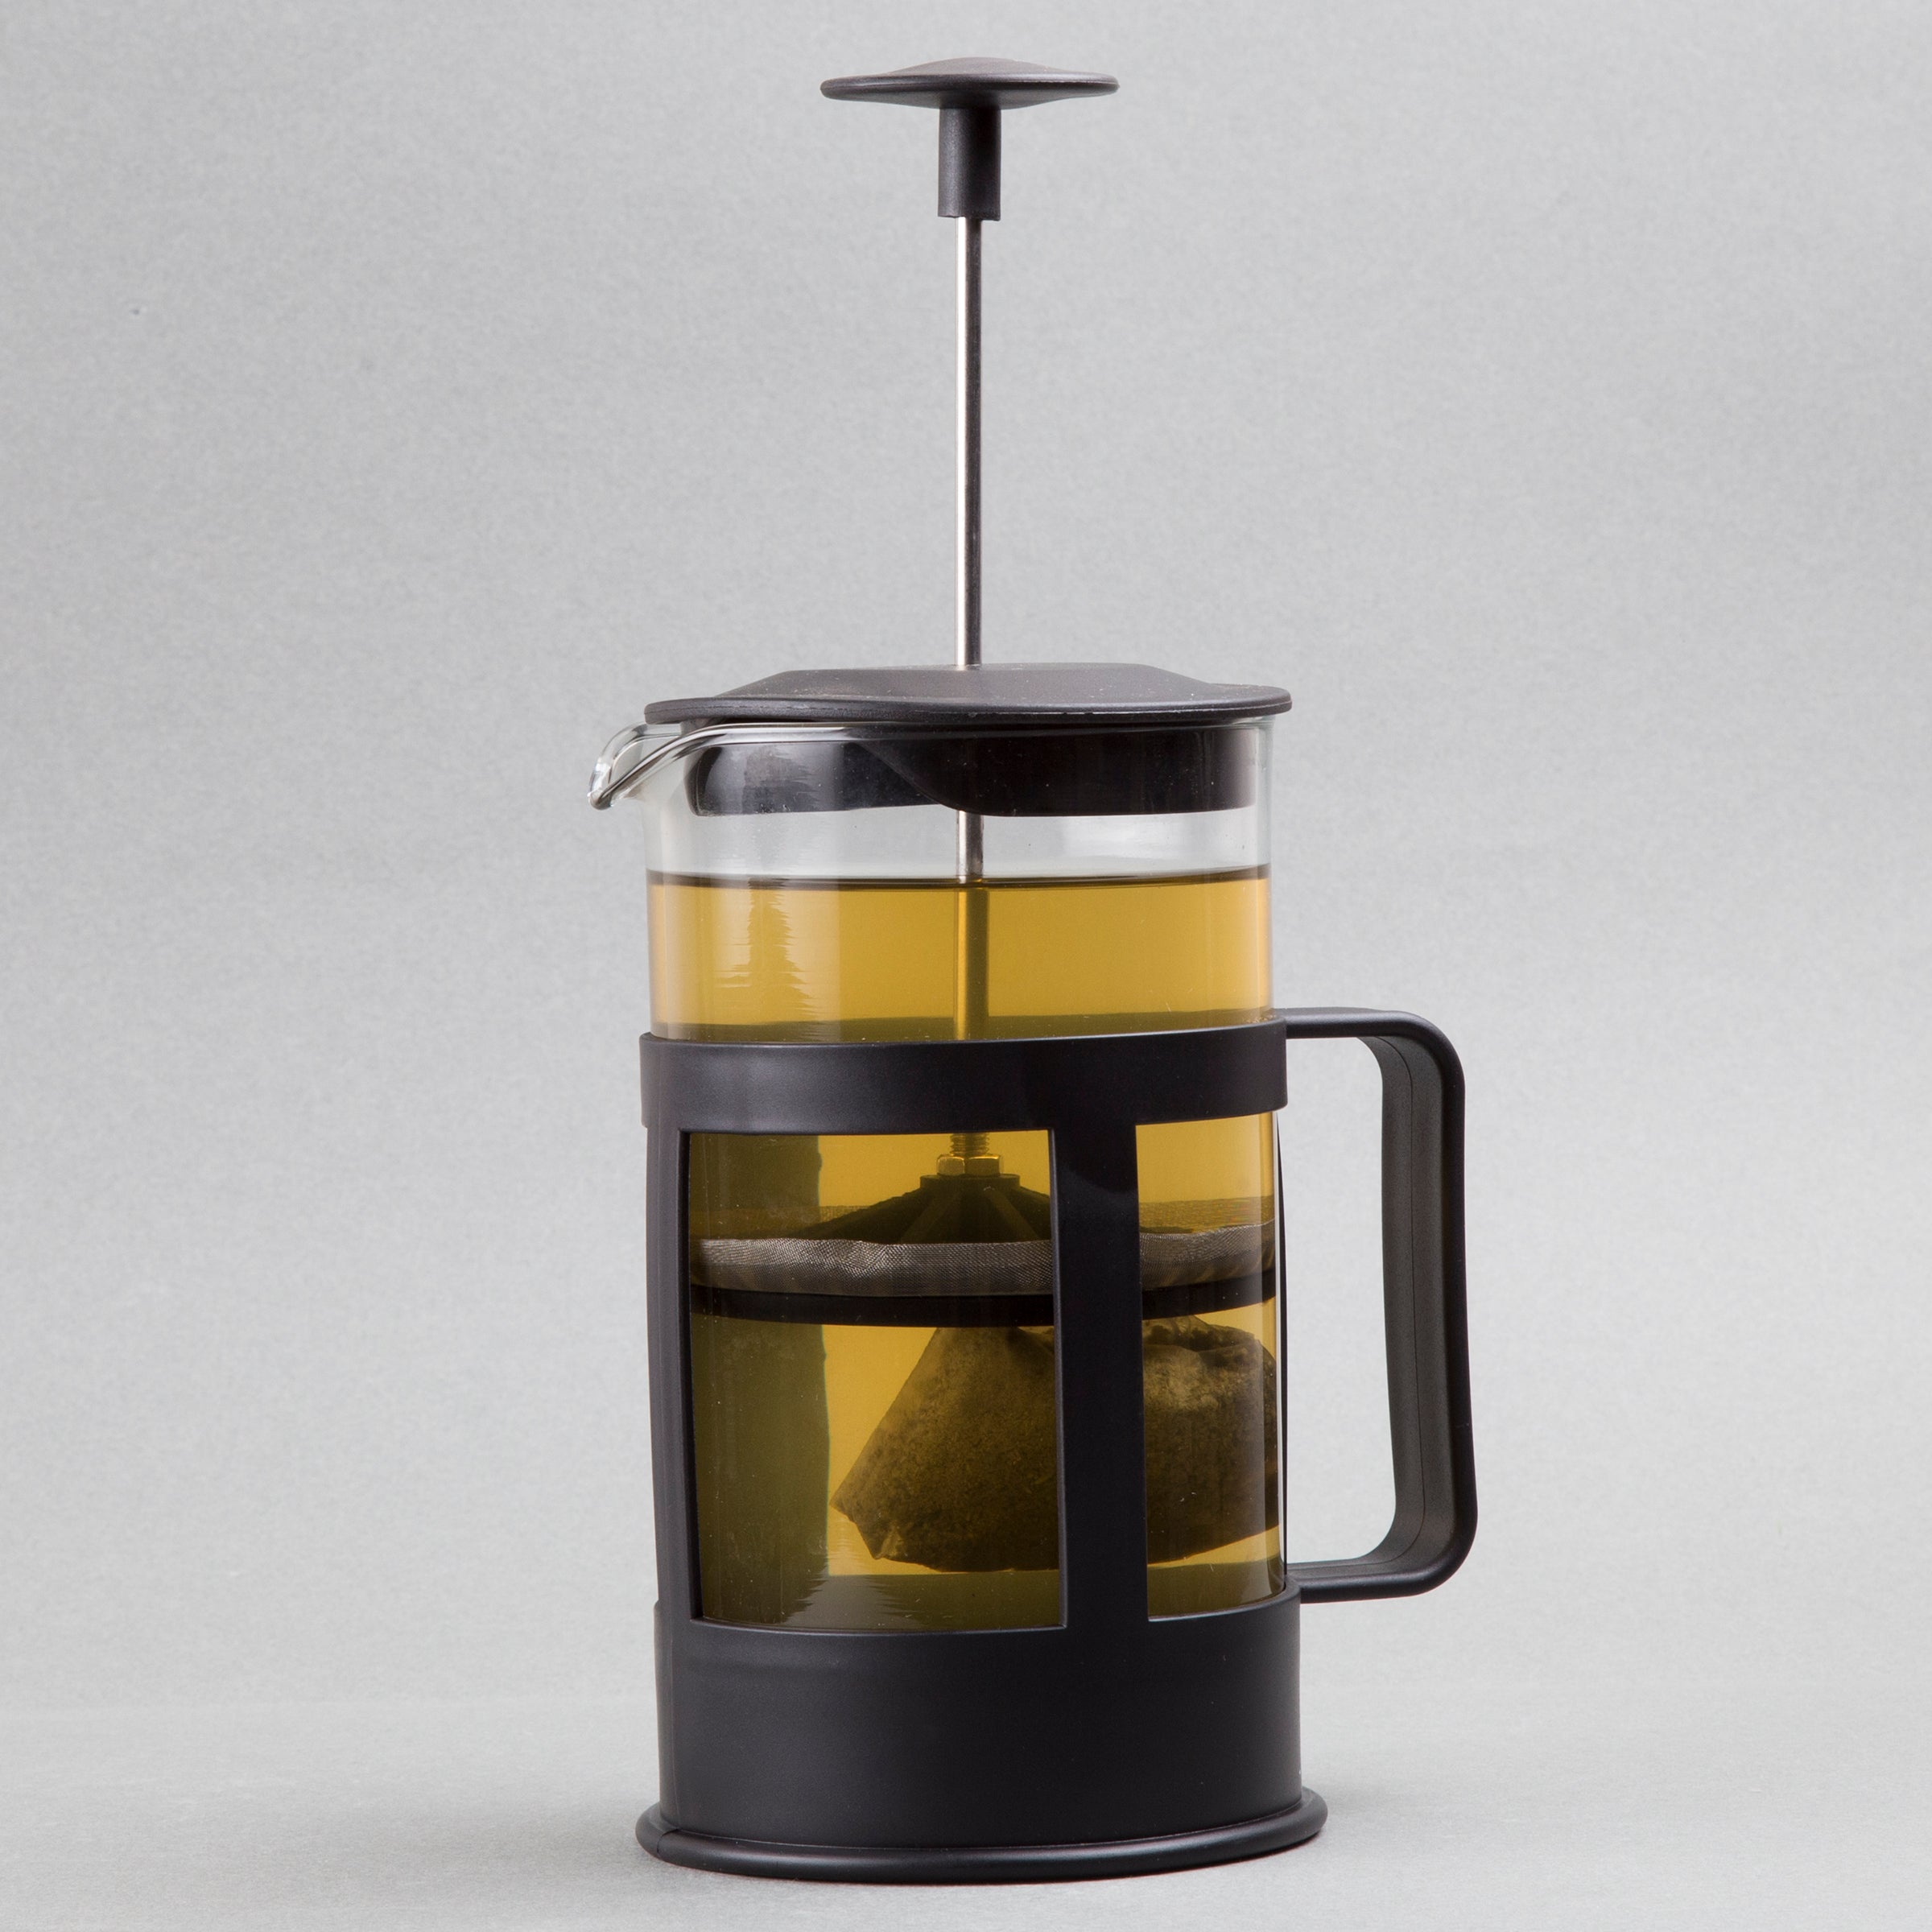 1000 ml (34 oz) French Press Coffee Plunger Glass Tea Maker